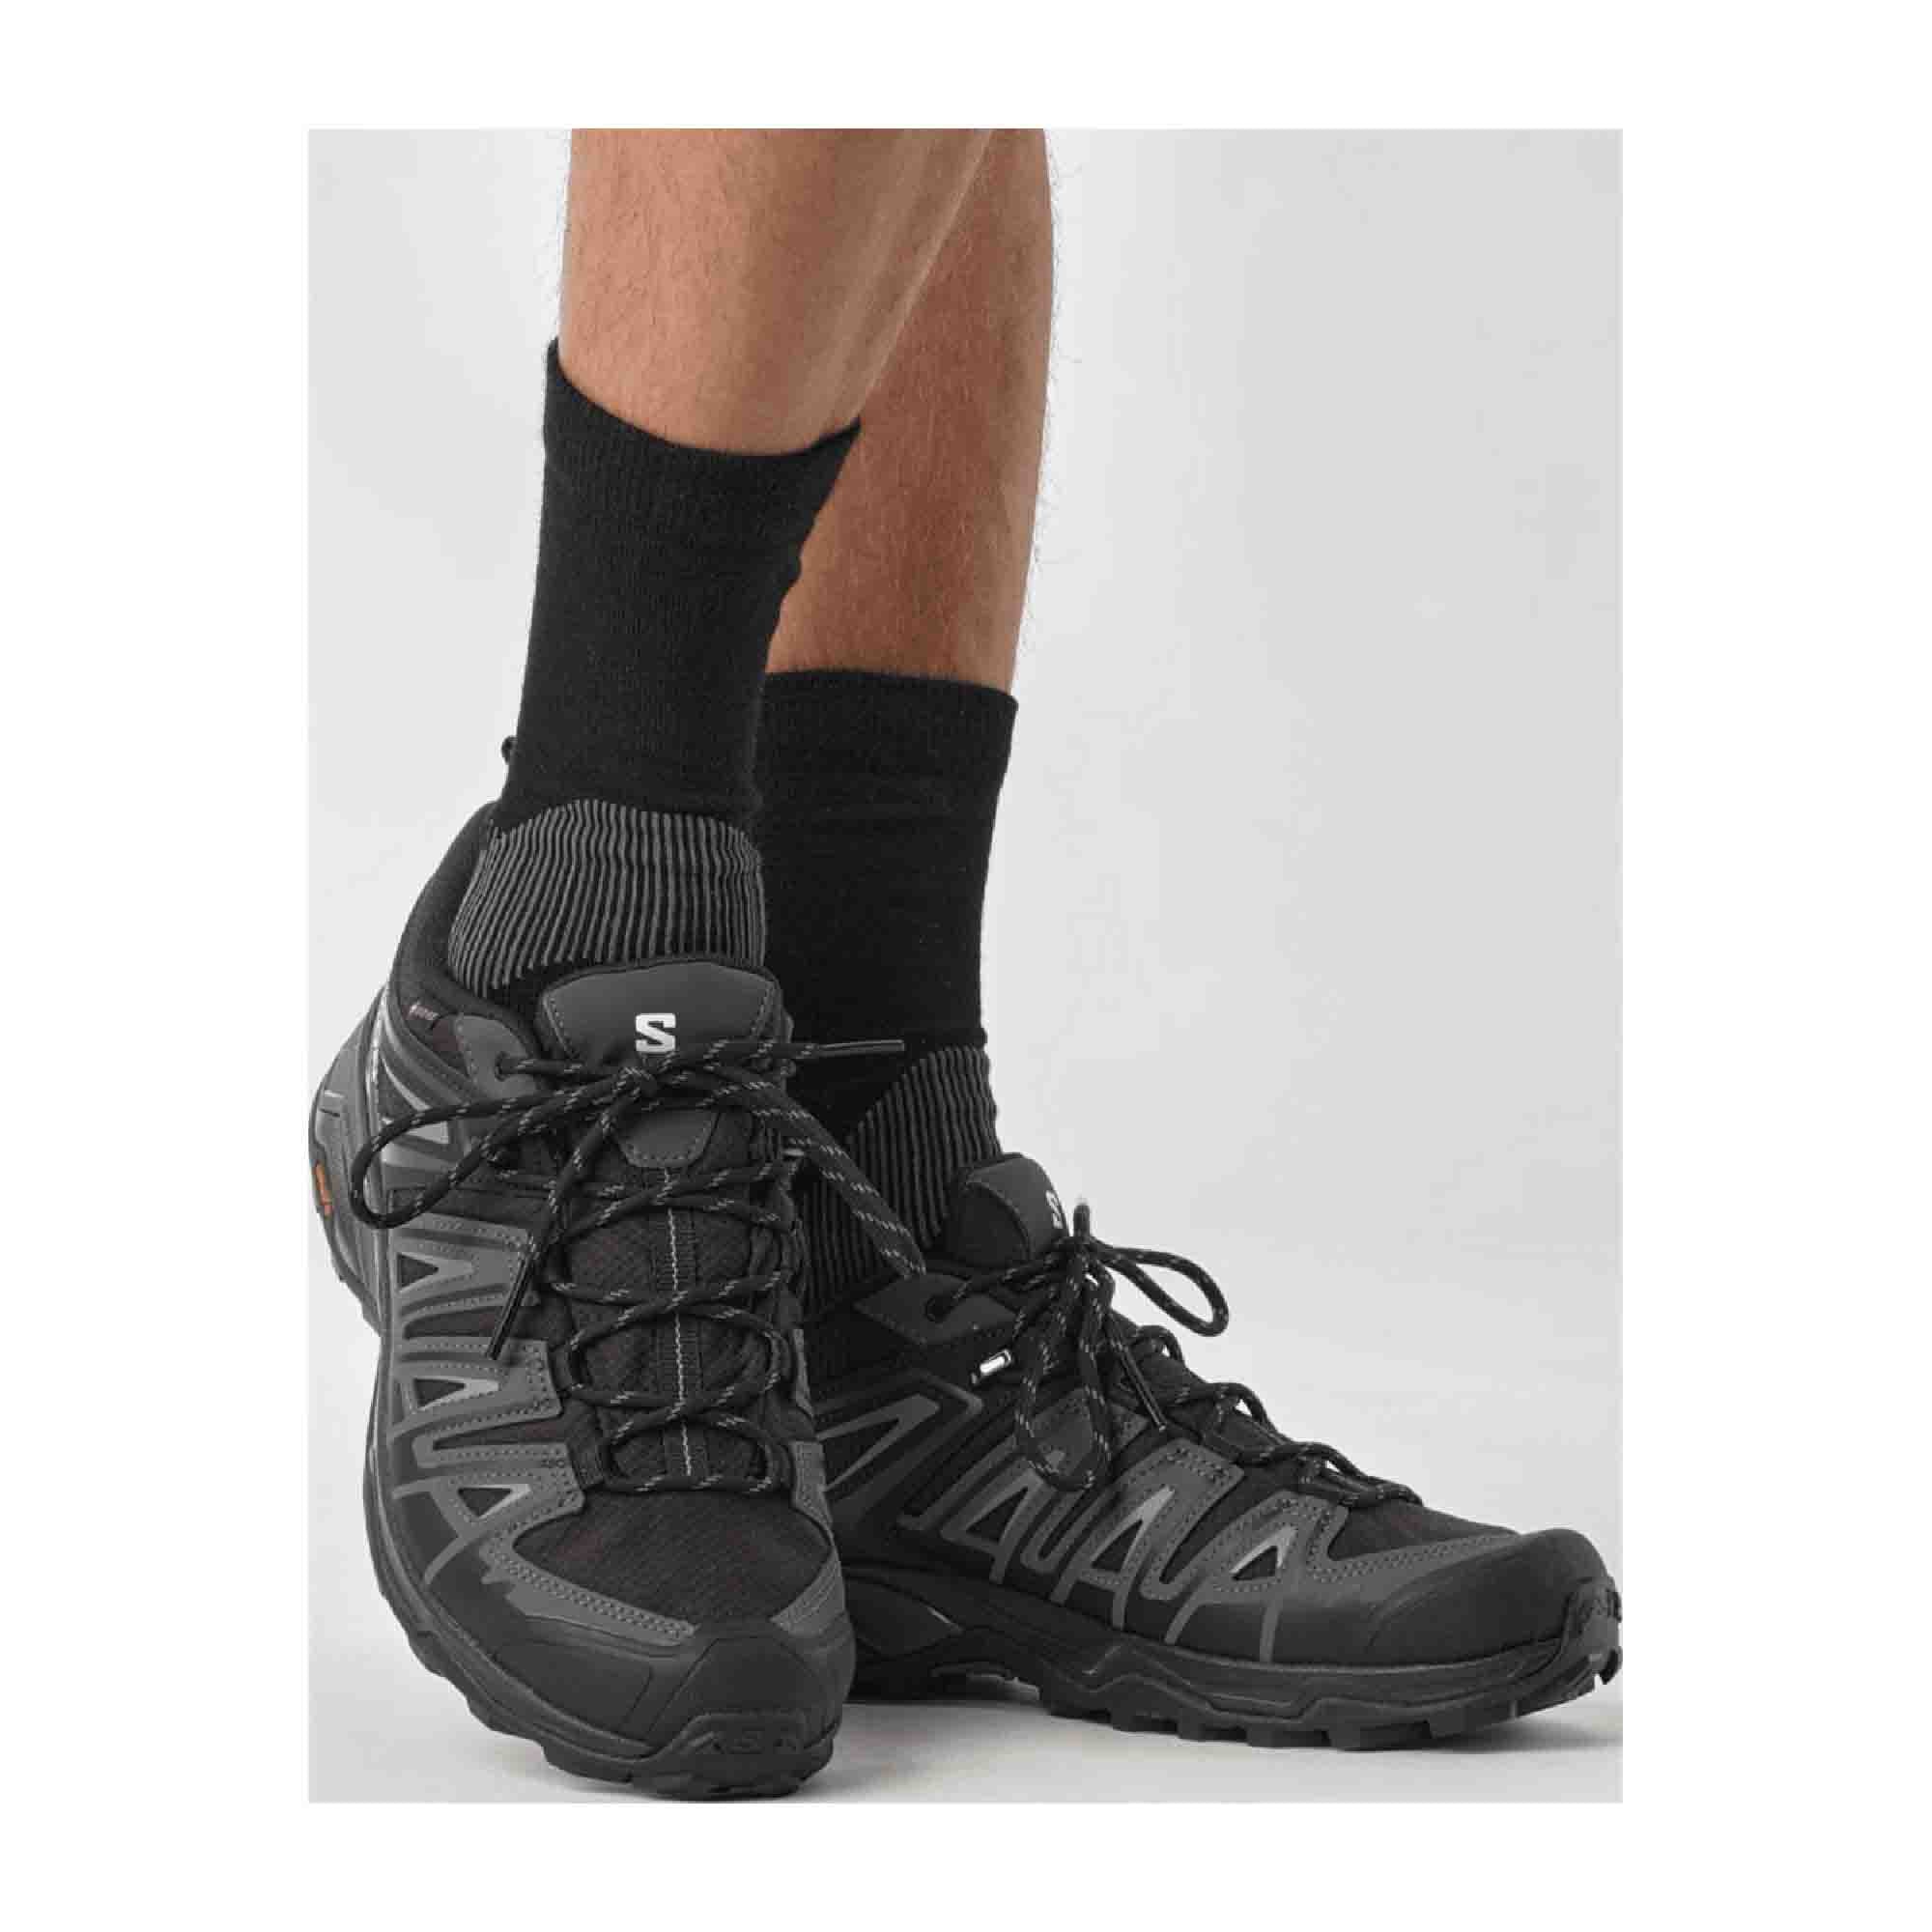 Salomon X ULTRA PIONEER GTX for men, black, shoes